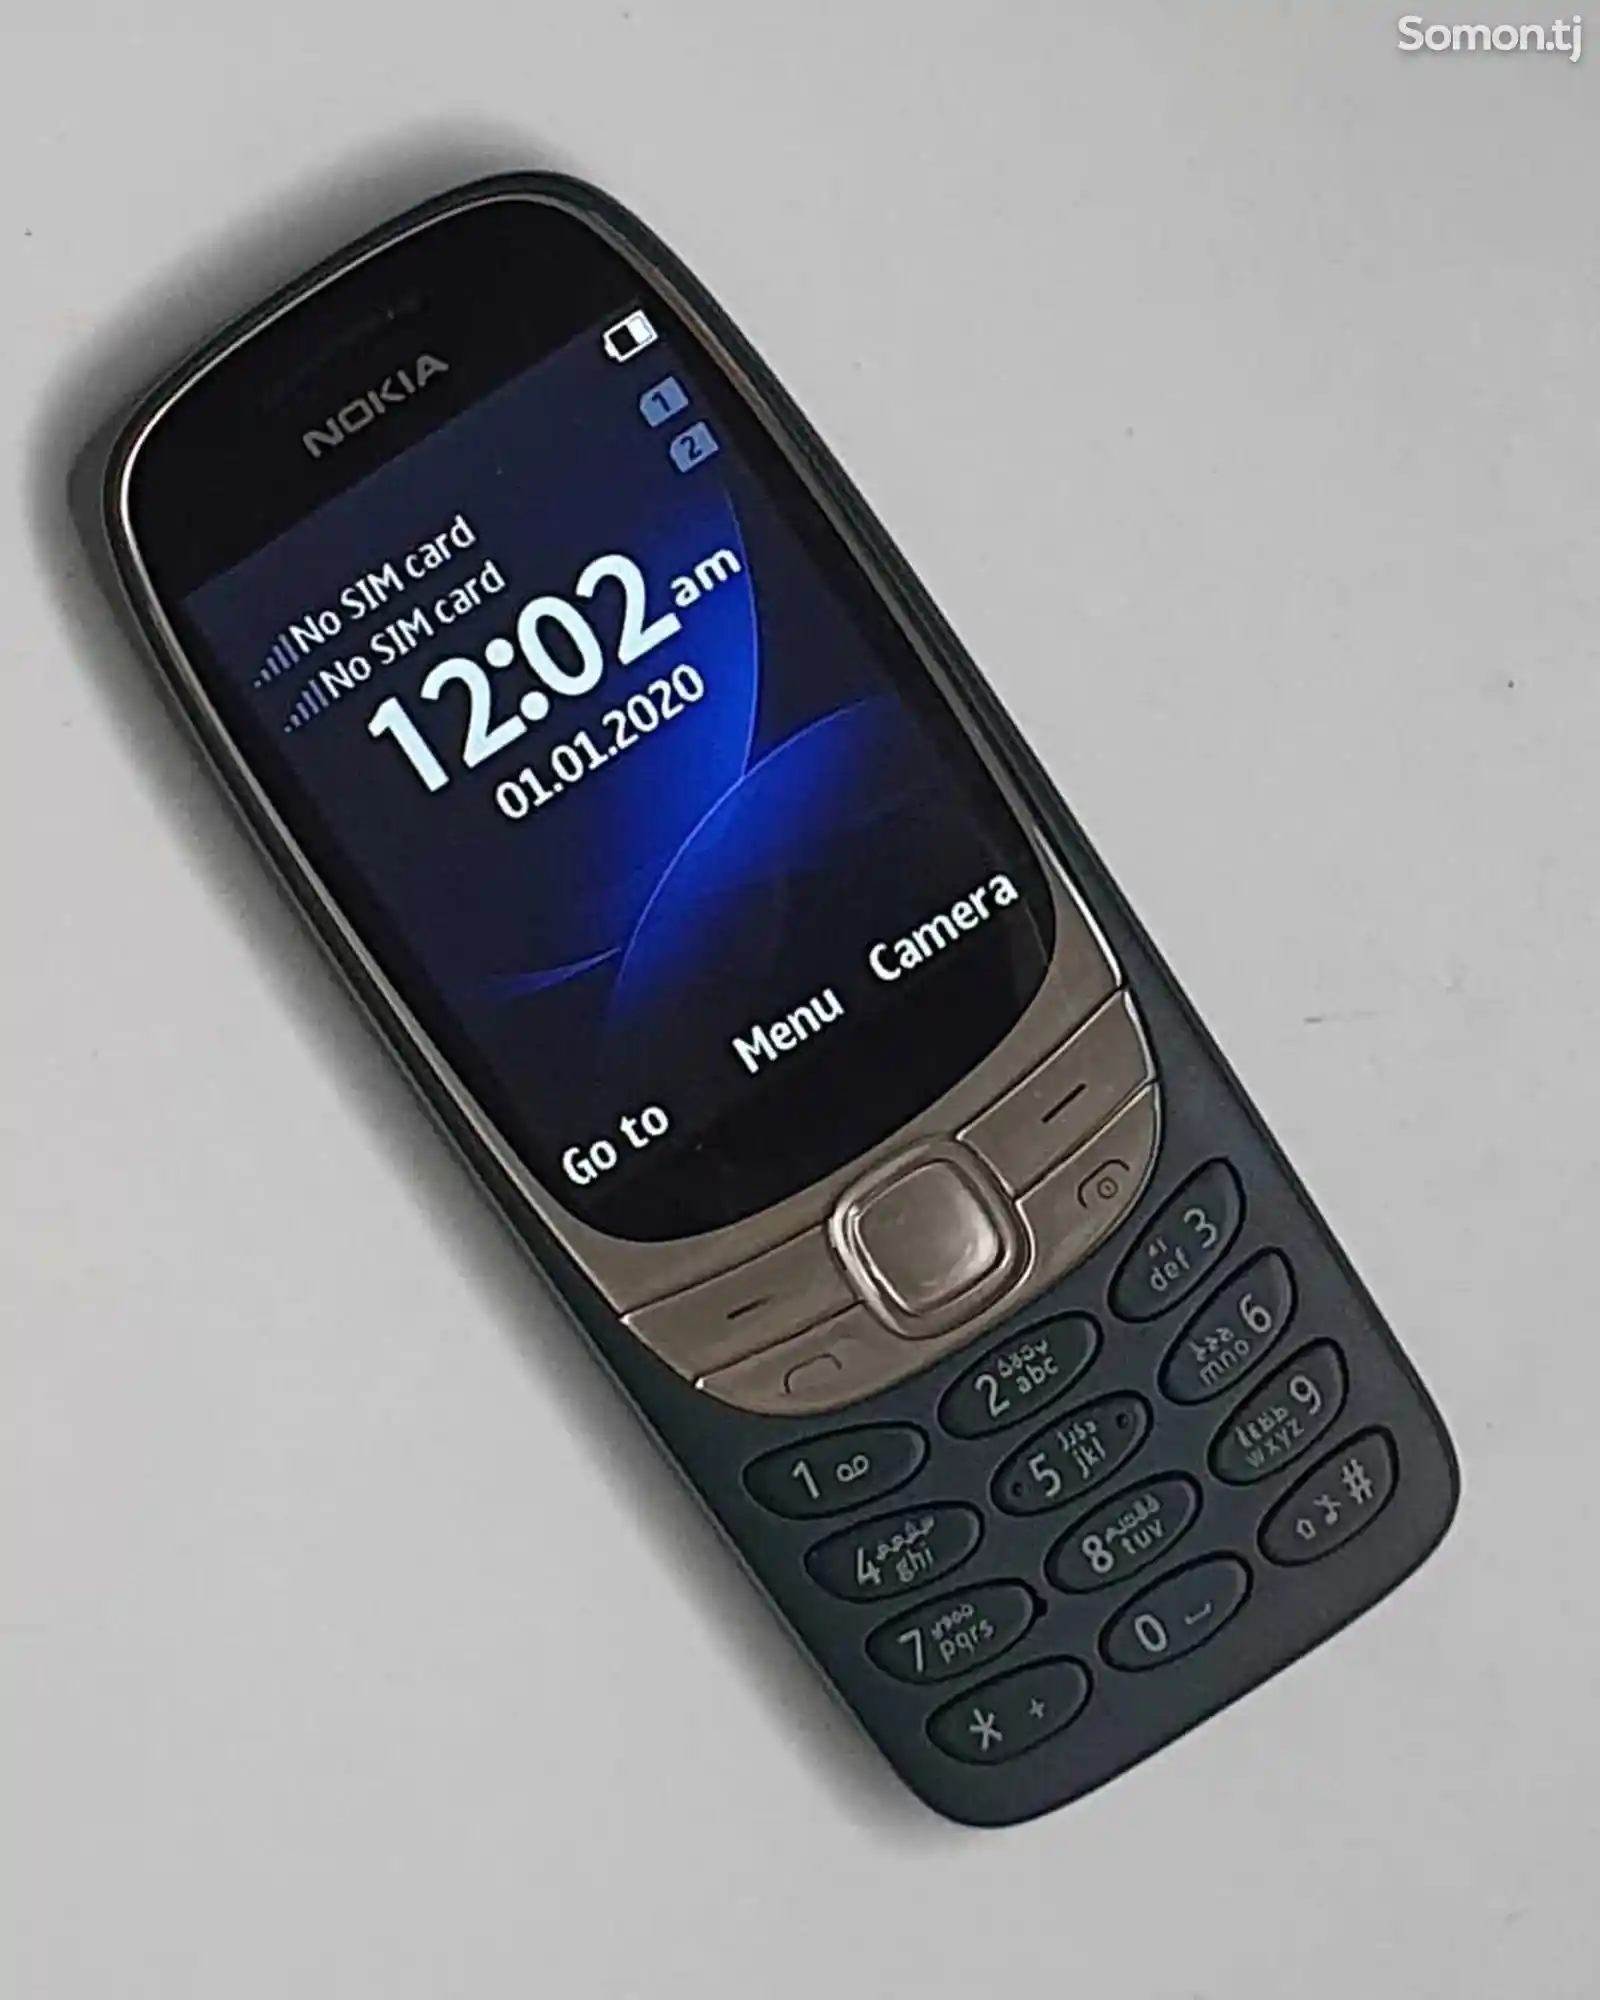 Nokia 6310 dual sim-1